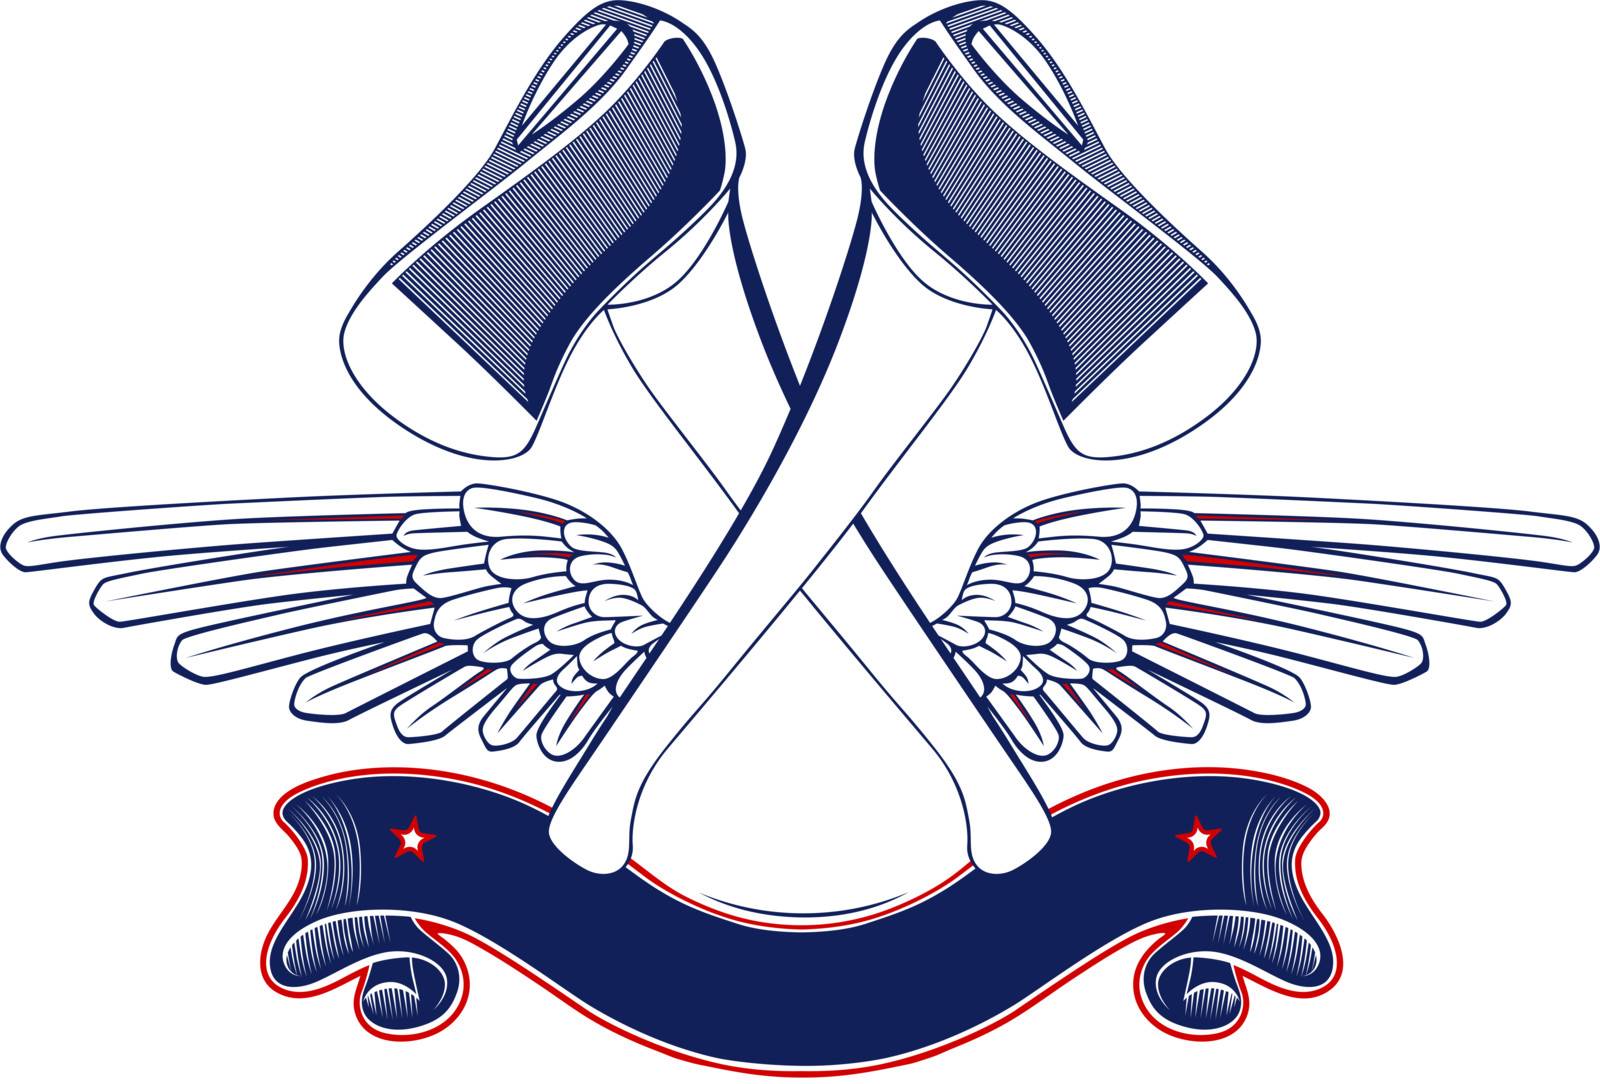 axe wing emblem by lusik_kolbaskin